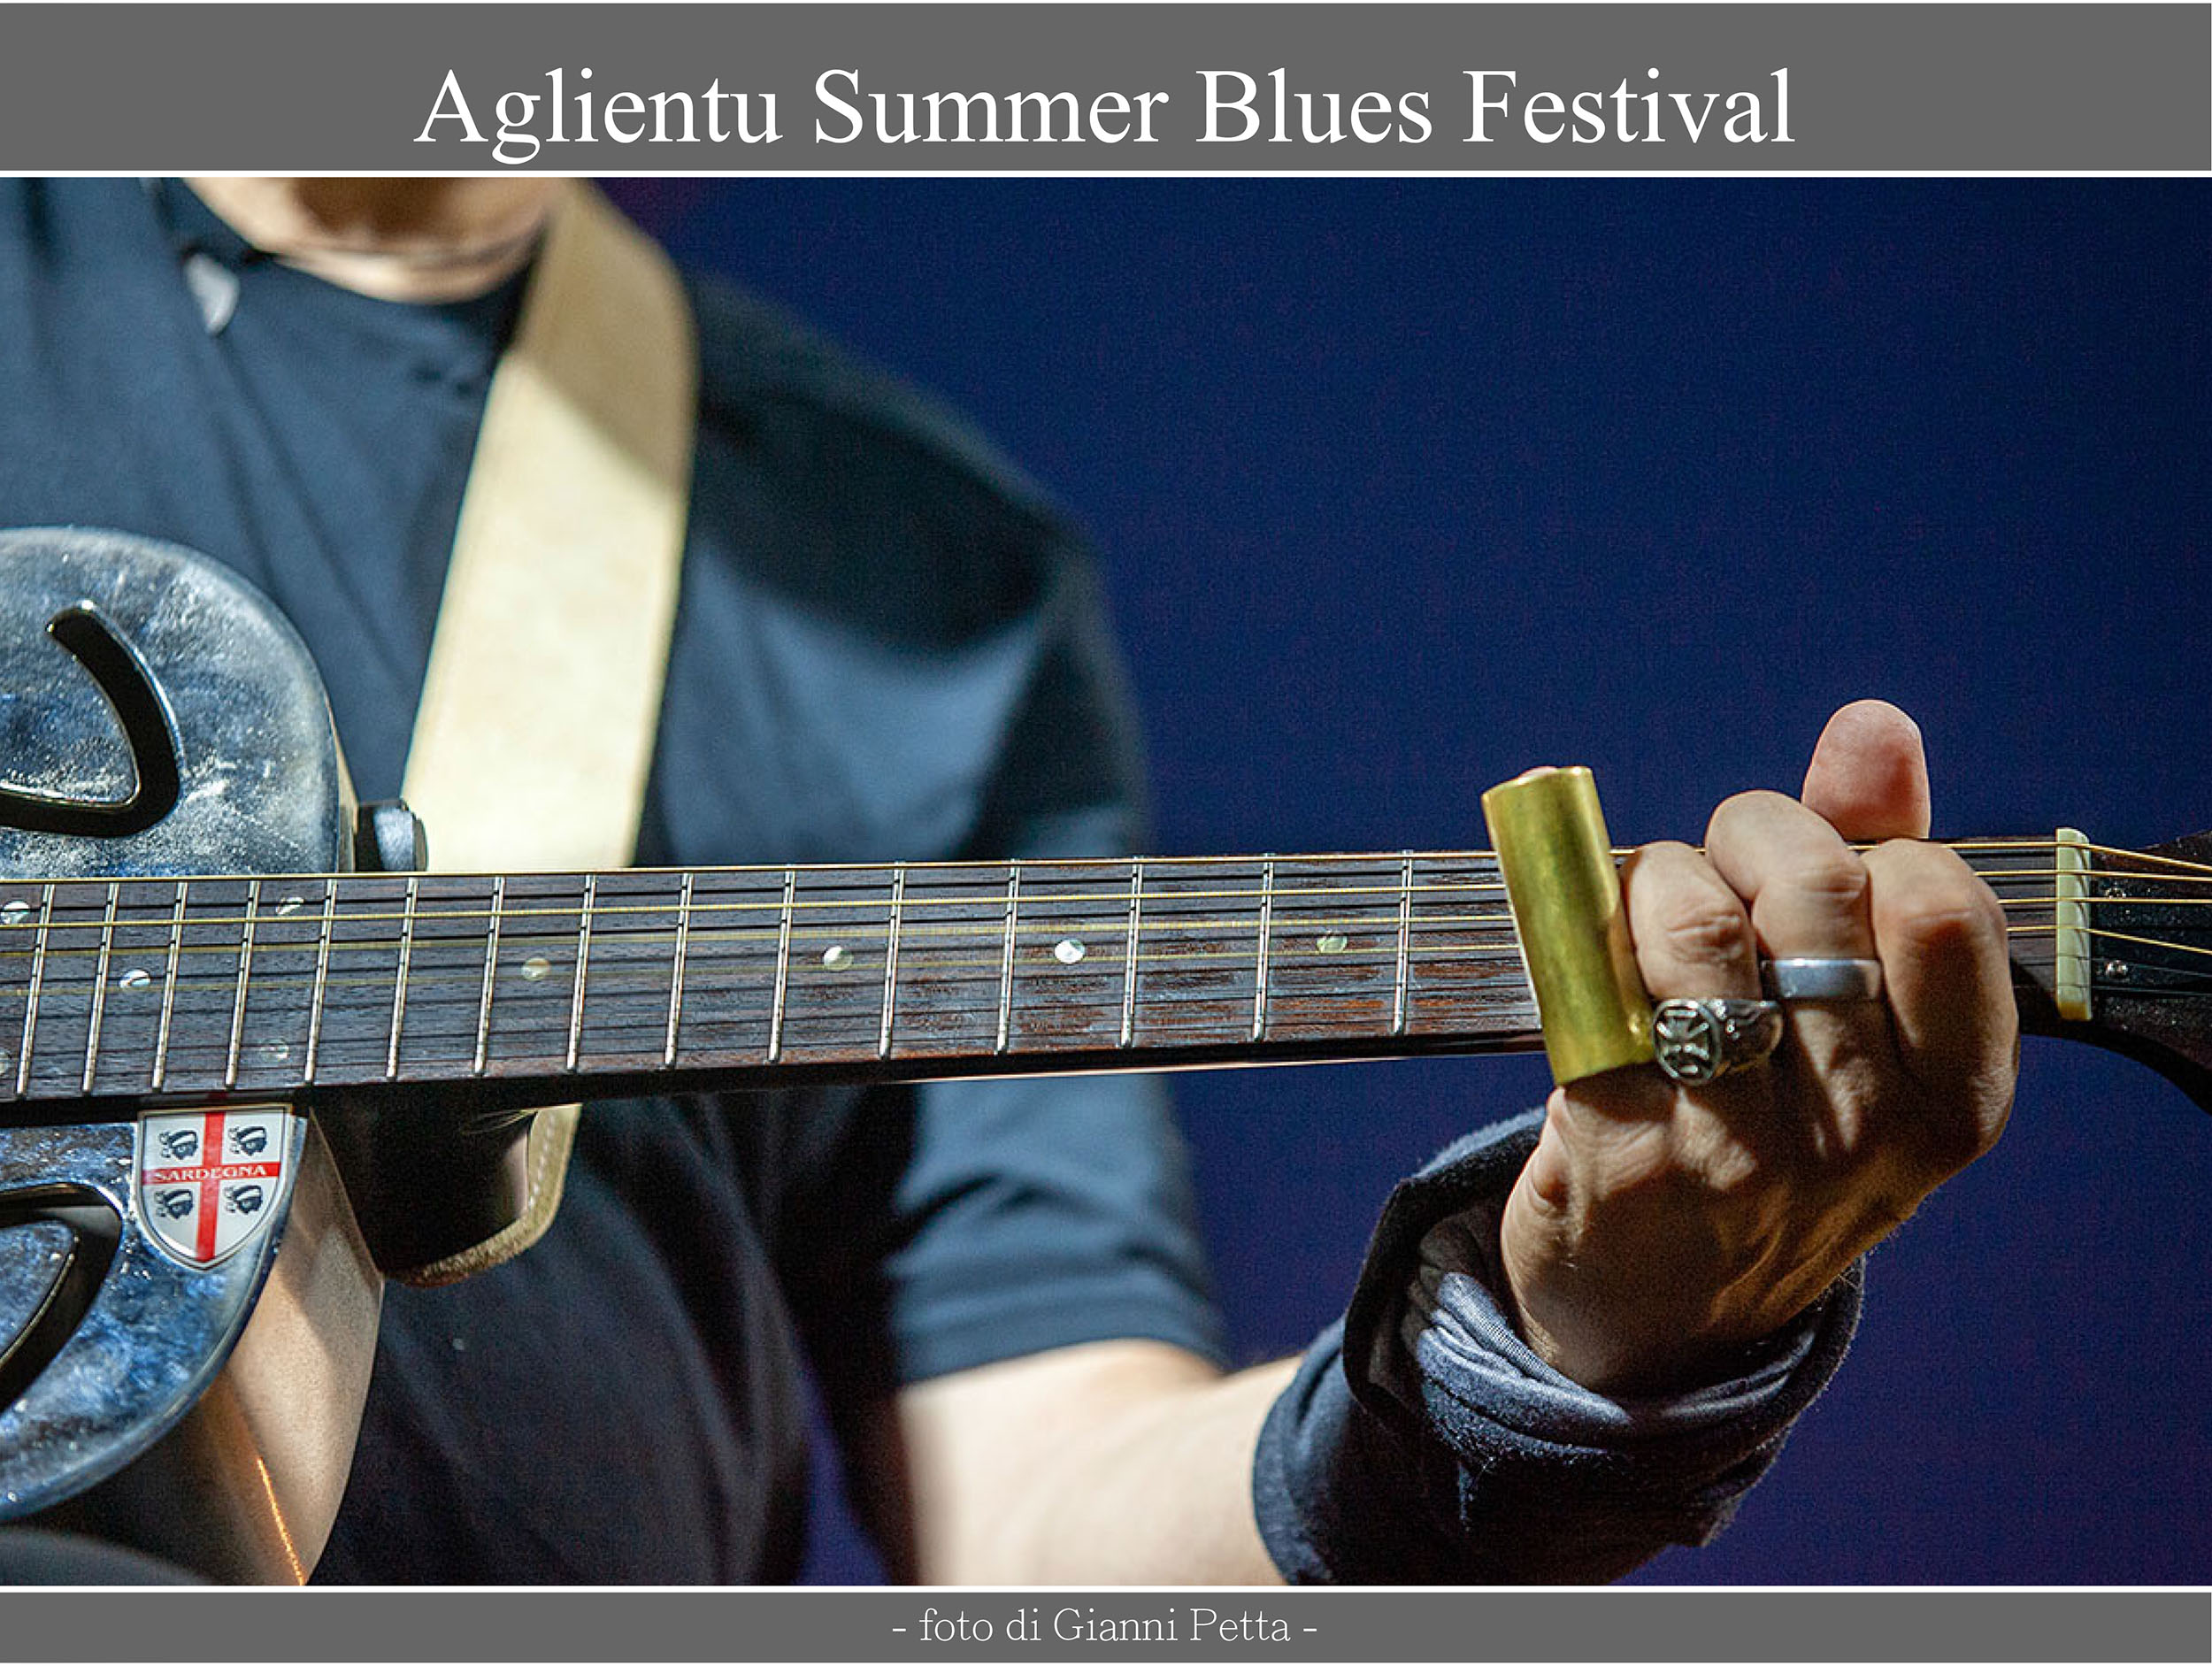 Aglientu Summer Blues Festival.